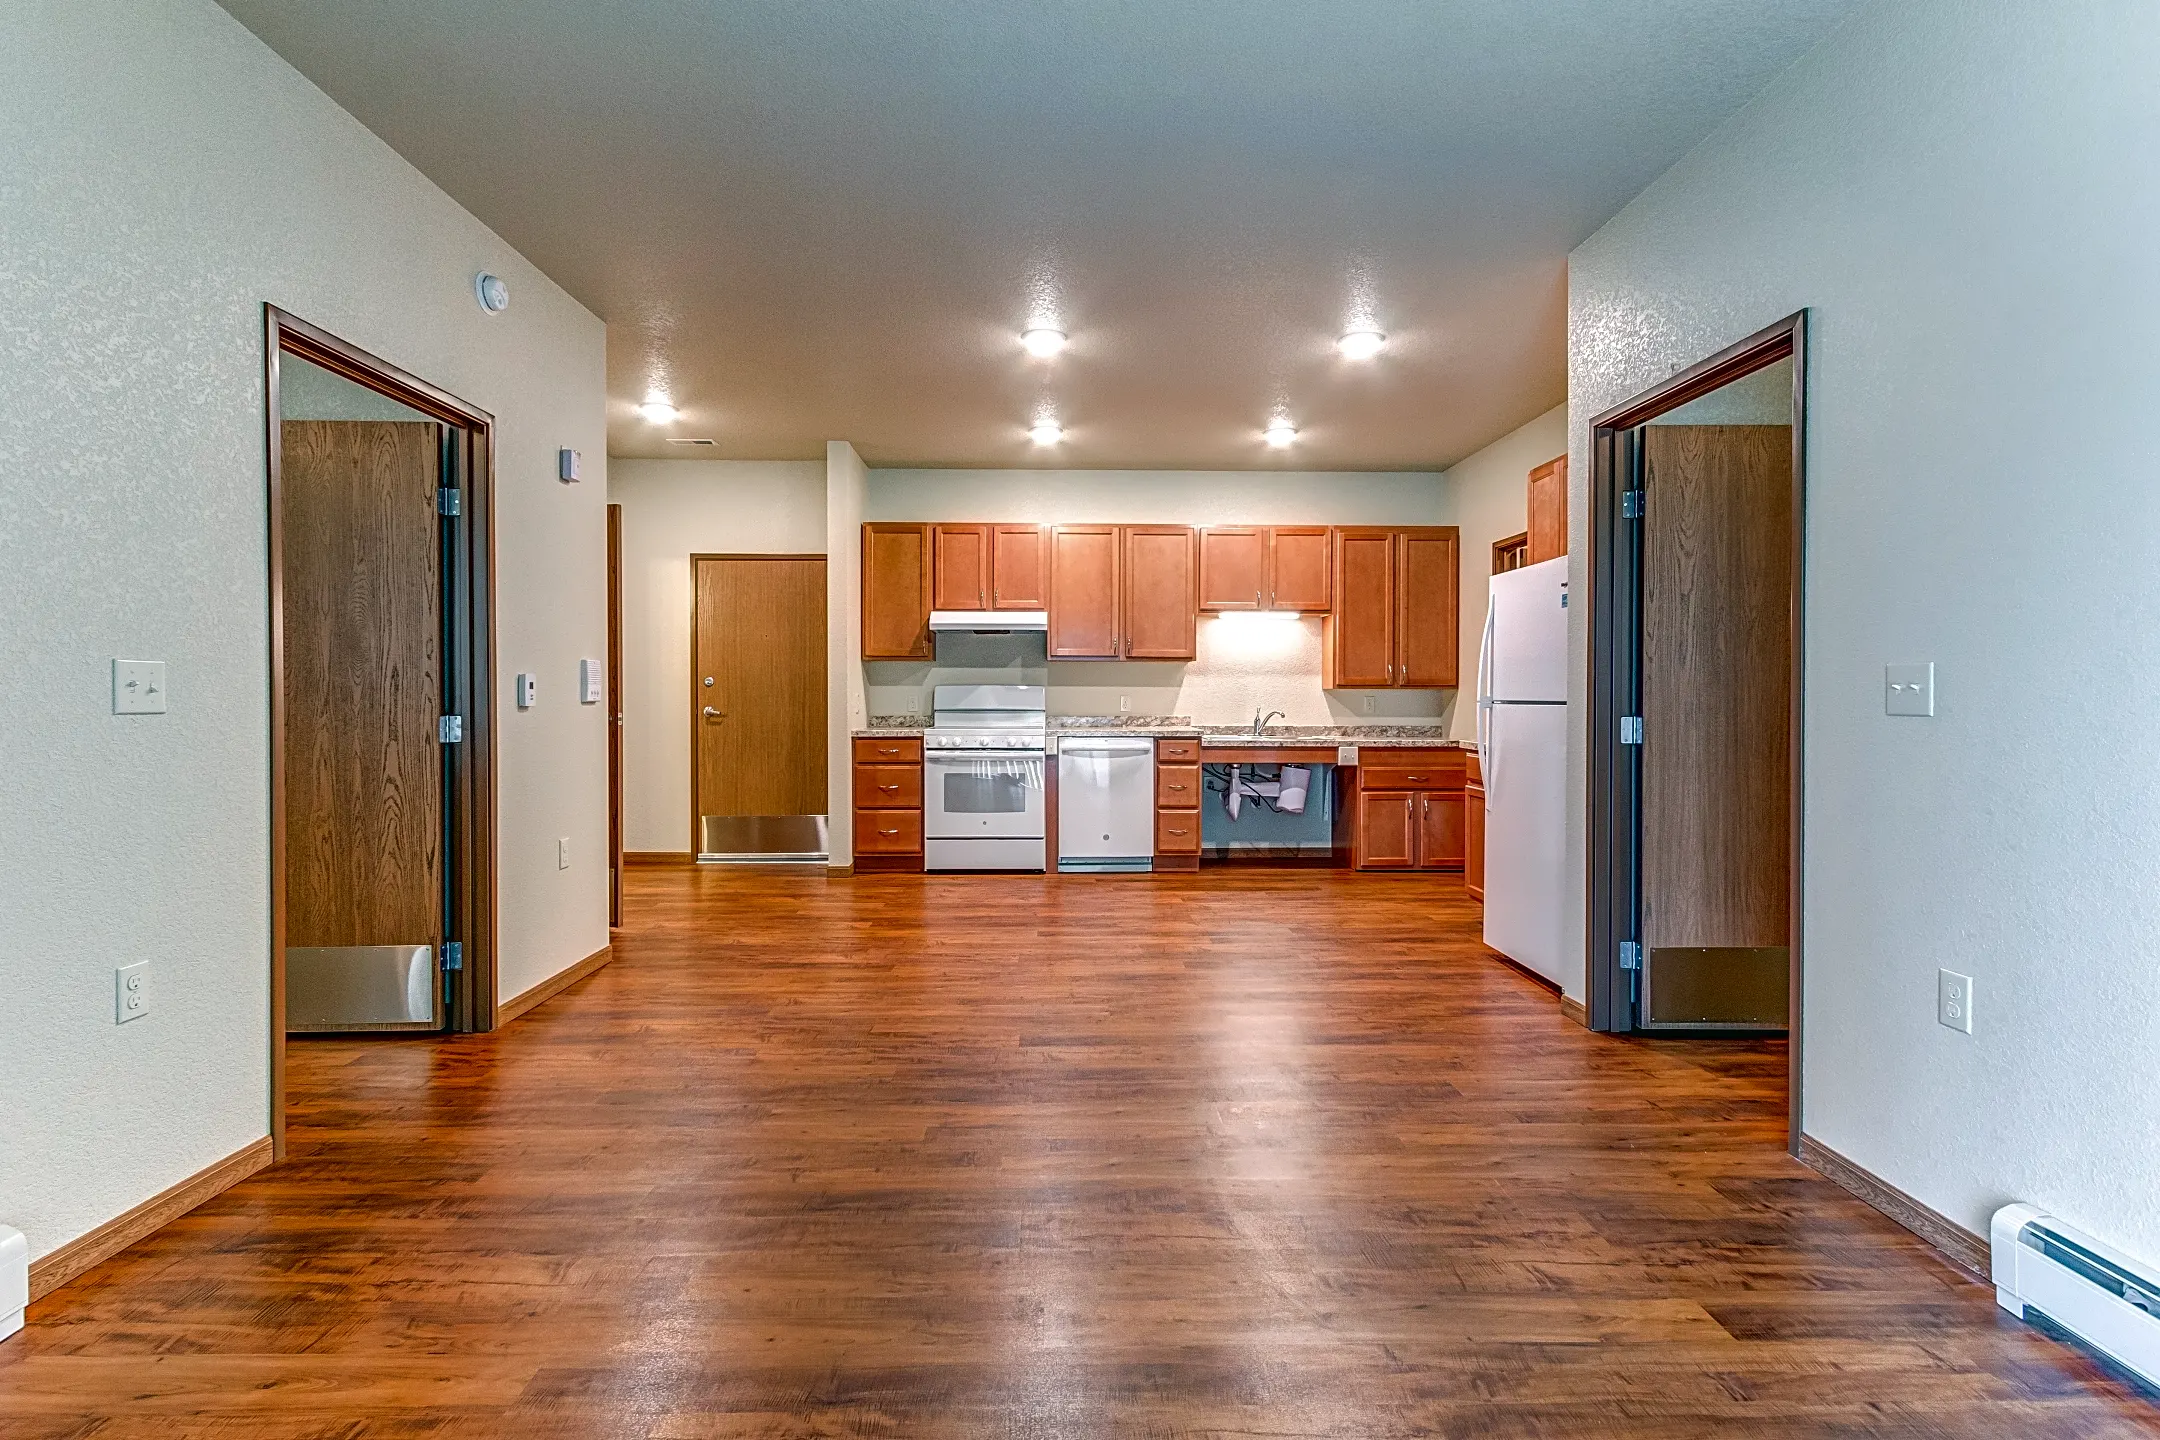 Living Room - Homefield Senior Living Apartments - Fargo, ND